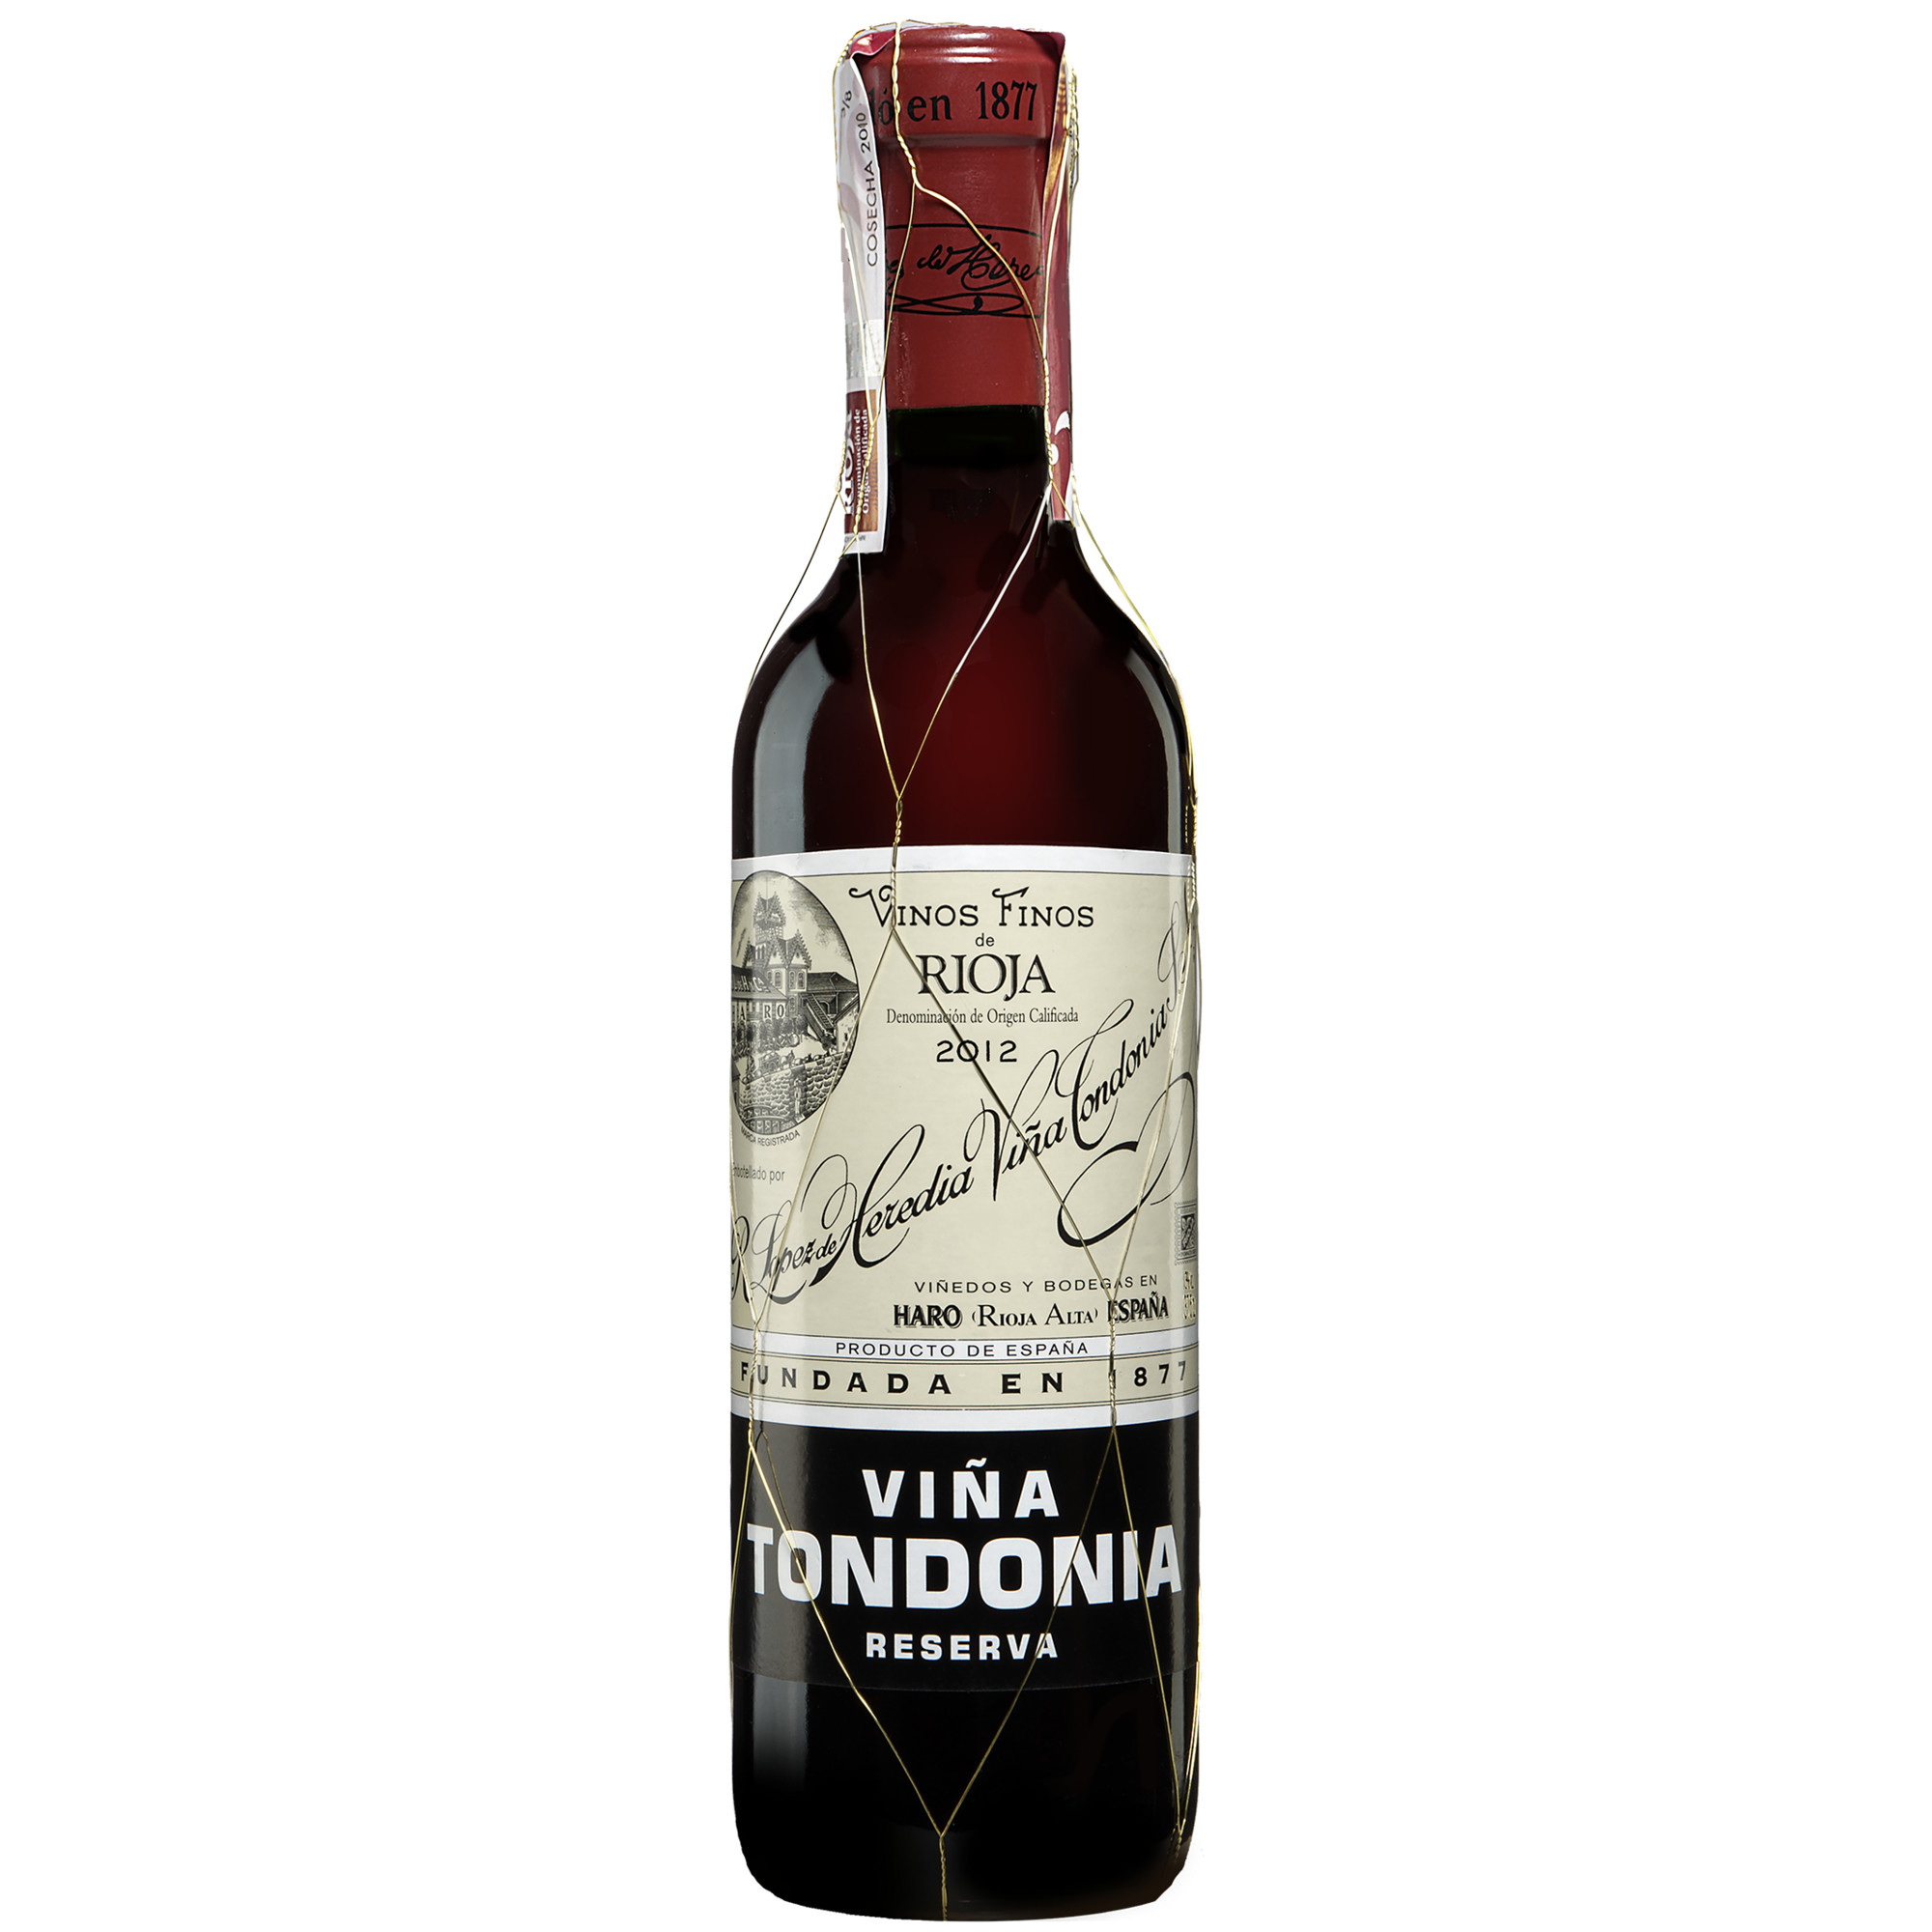 Tondonia »Viña Tondonia« Tinto Reserva - 0,375 L. 2012  013.5% Vol. Rotwein Trocken aus Spanien